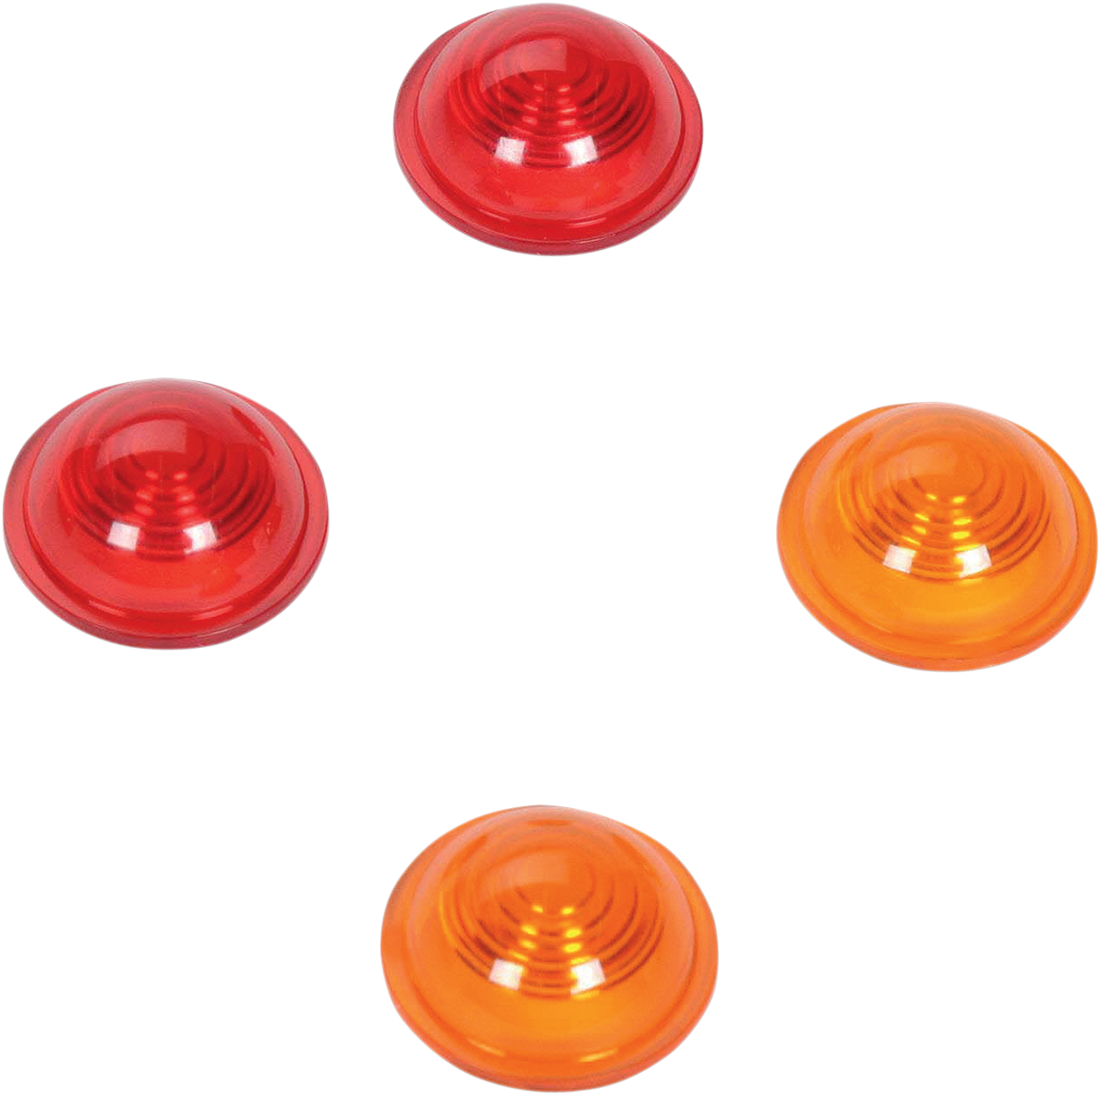 2020-0122 - DRAG SPECIALTIES Mini-Bullet Lens Kit - Amber/Red 20-6592-A/R